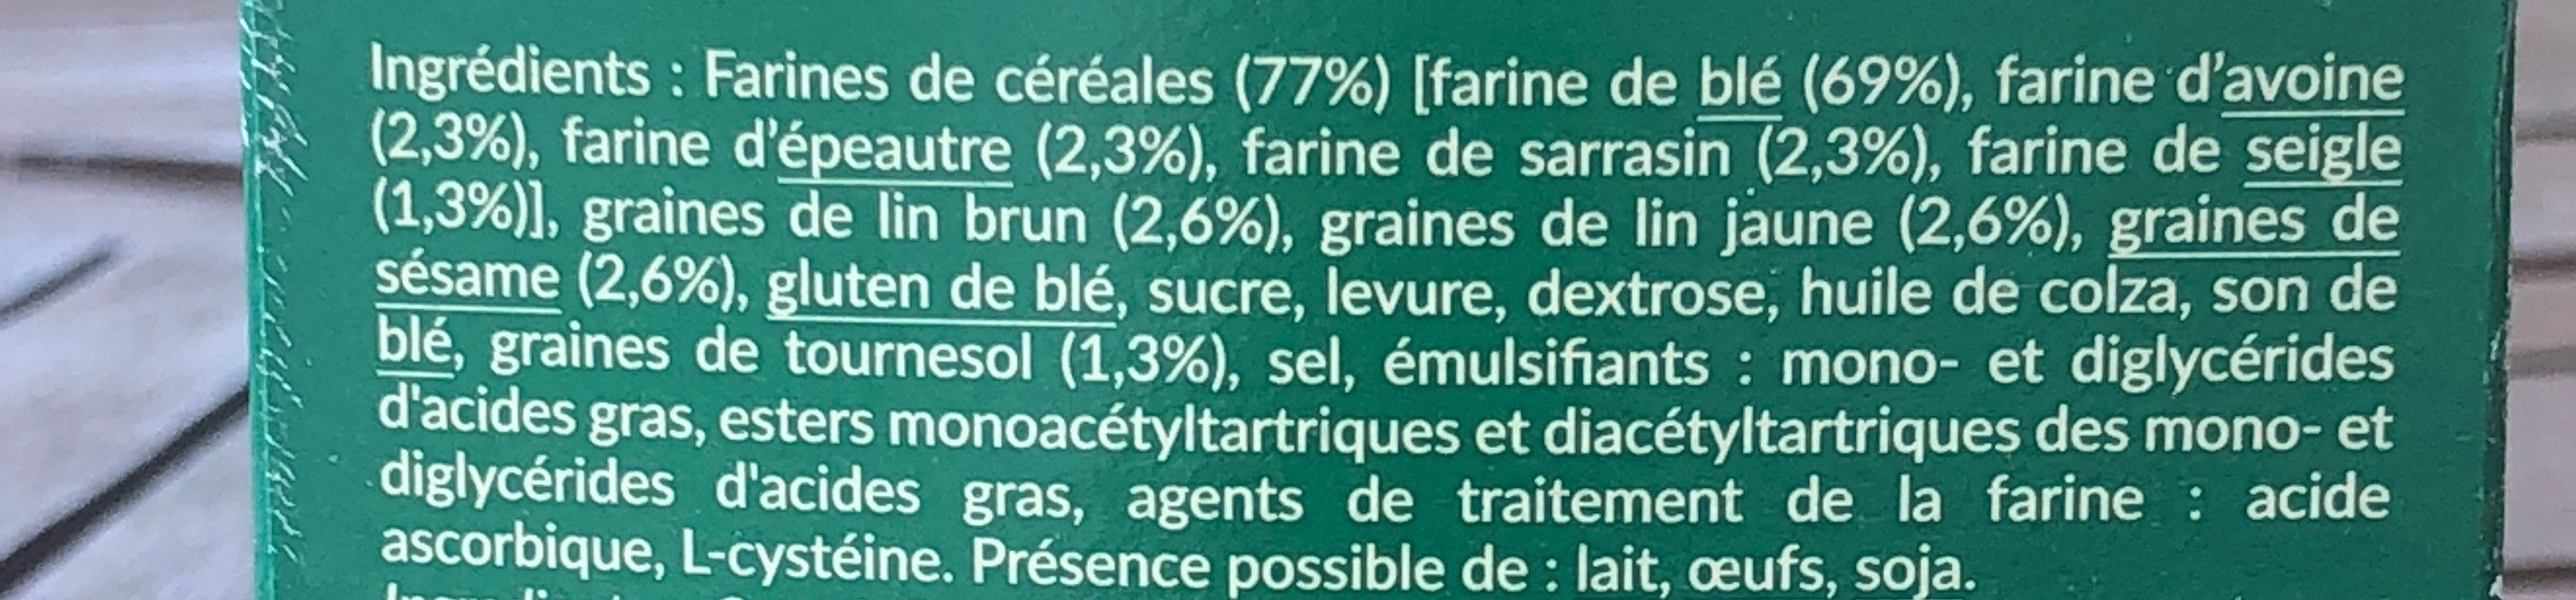 Baguettine 5 céréales - Ingredients - fr